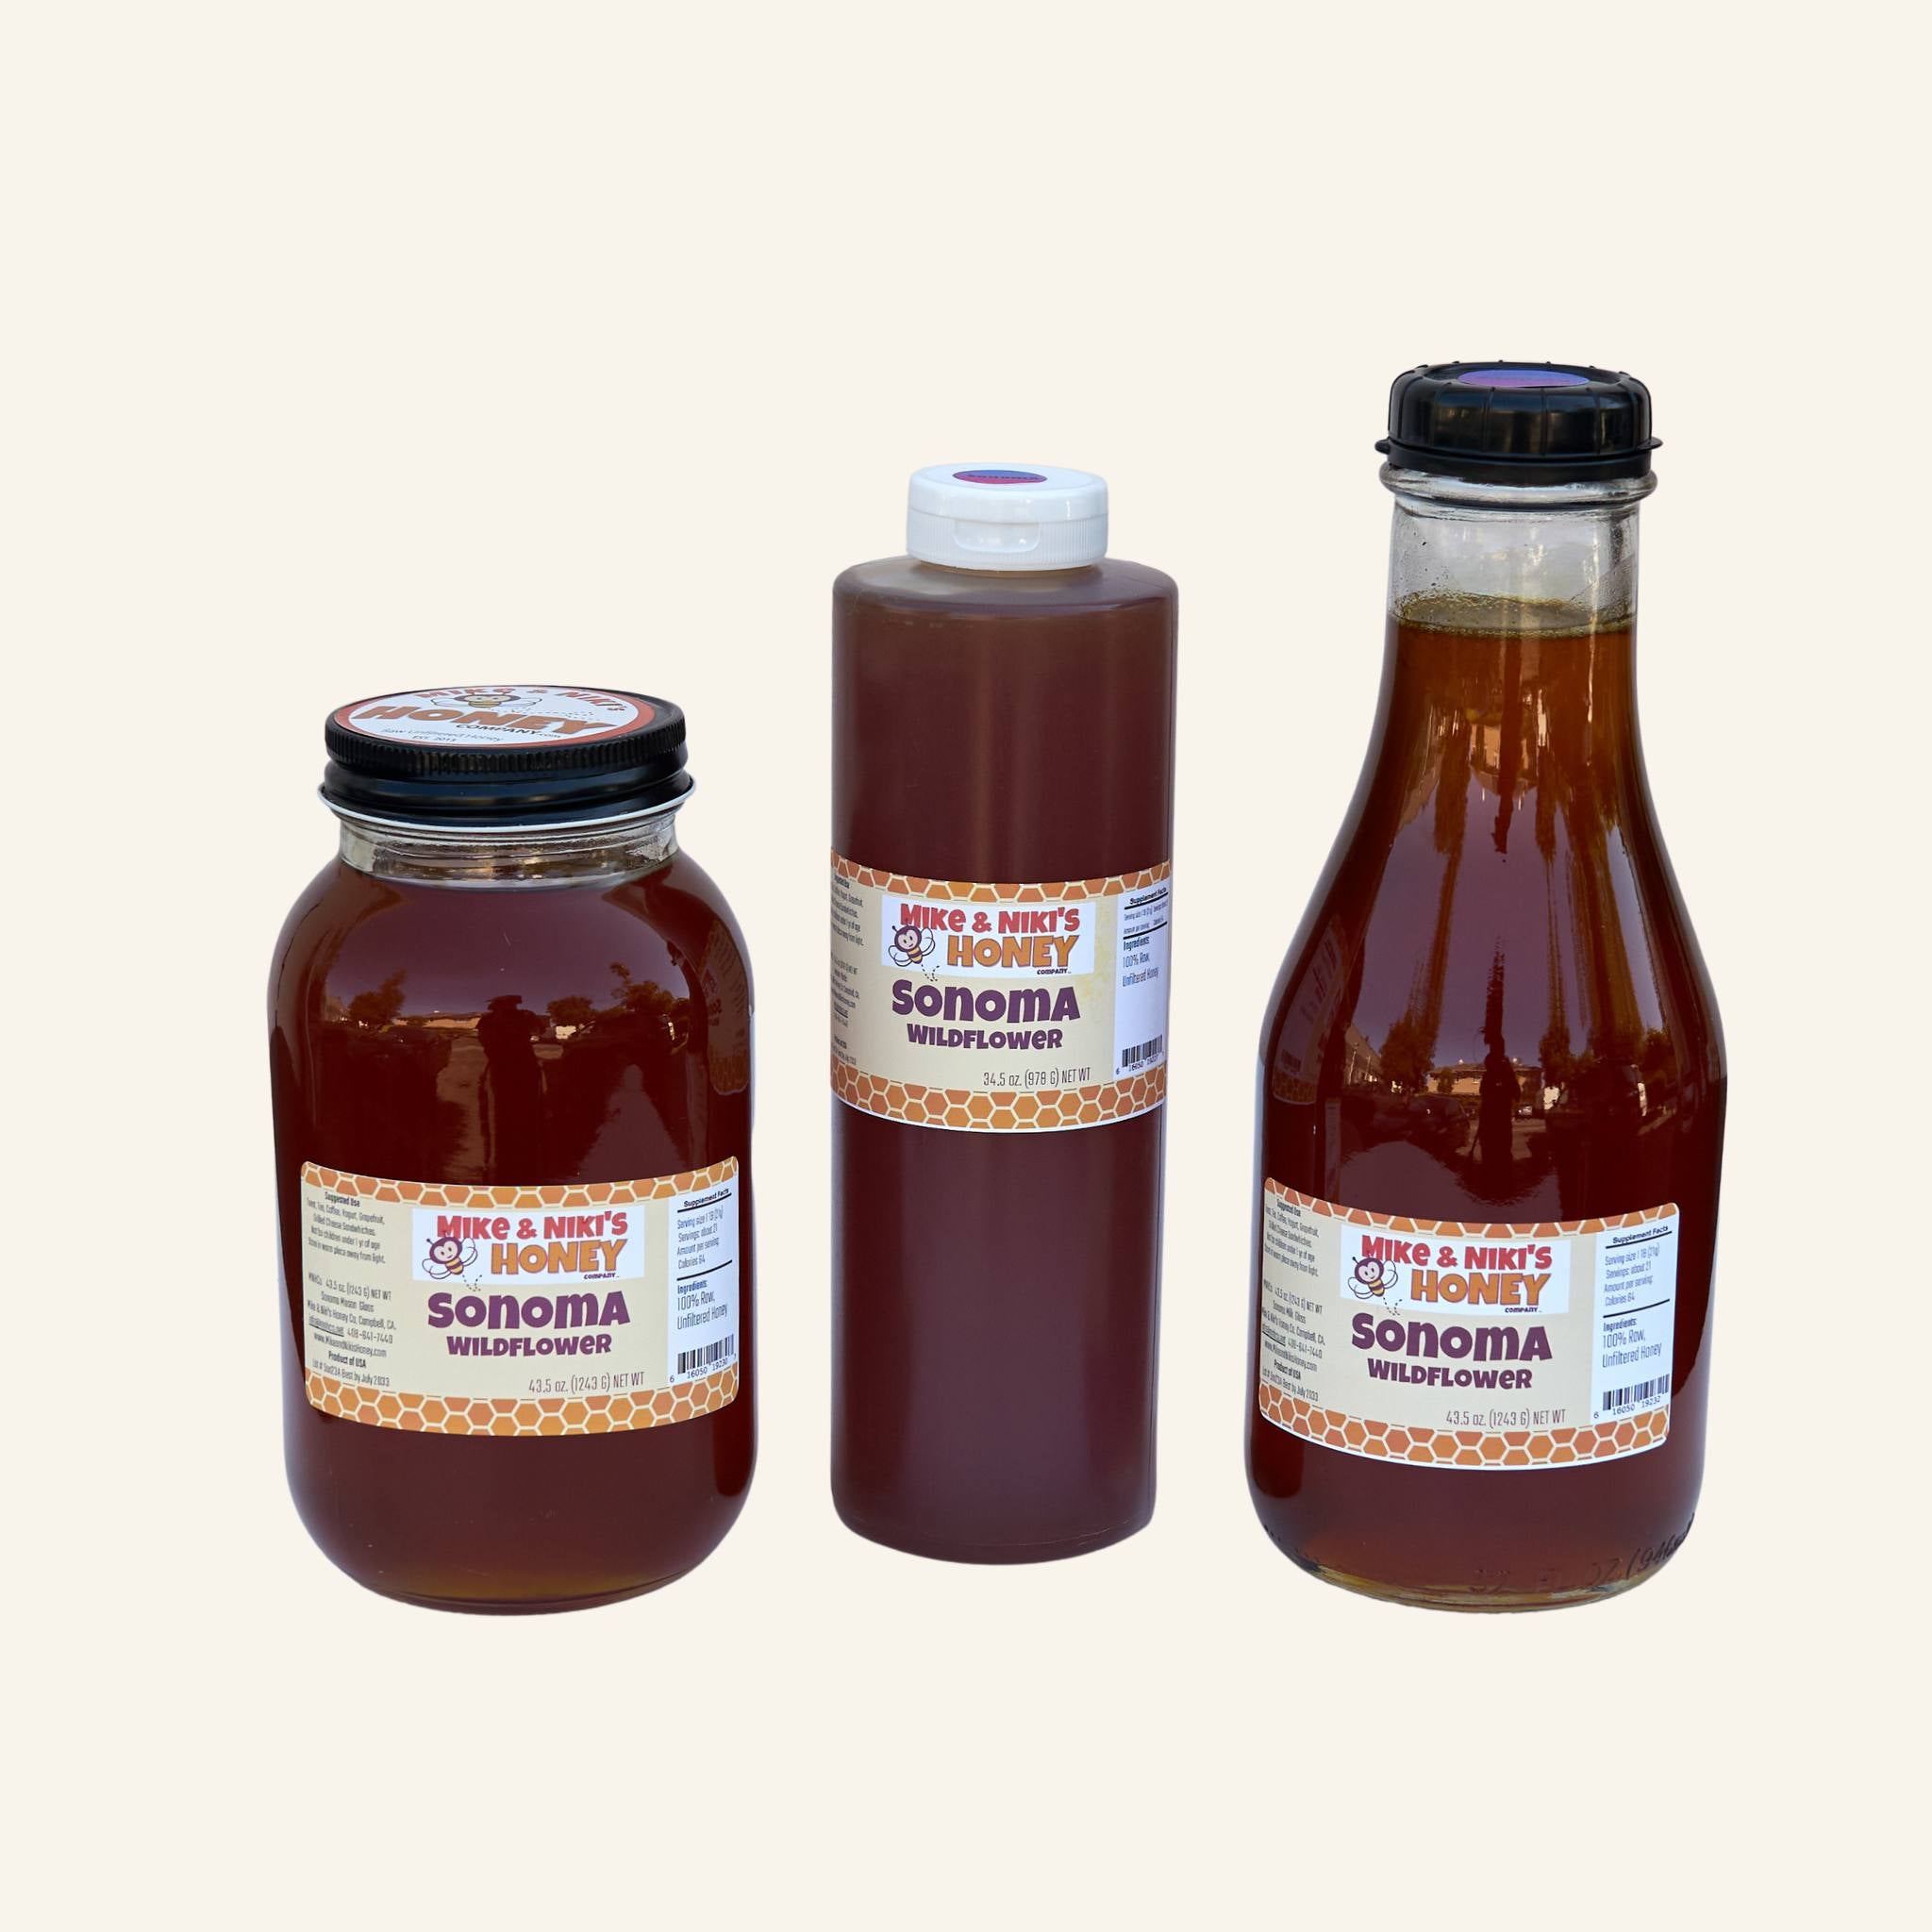 Sonoma Wildflower Honey